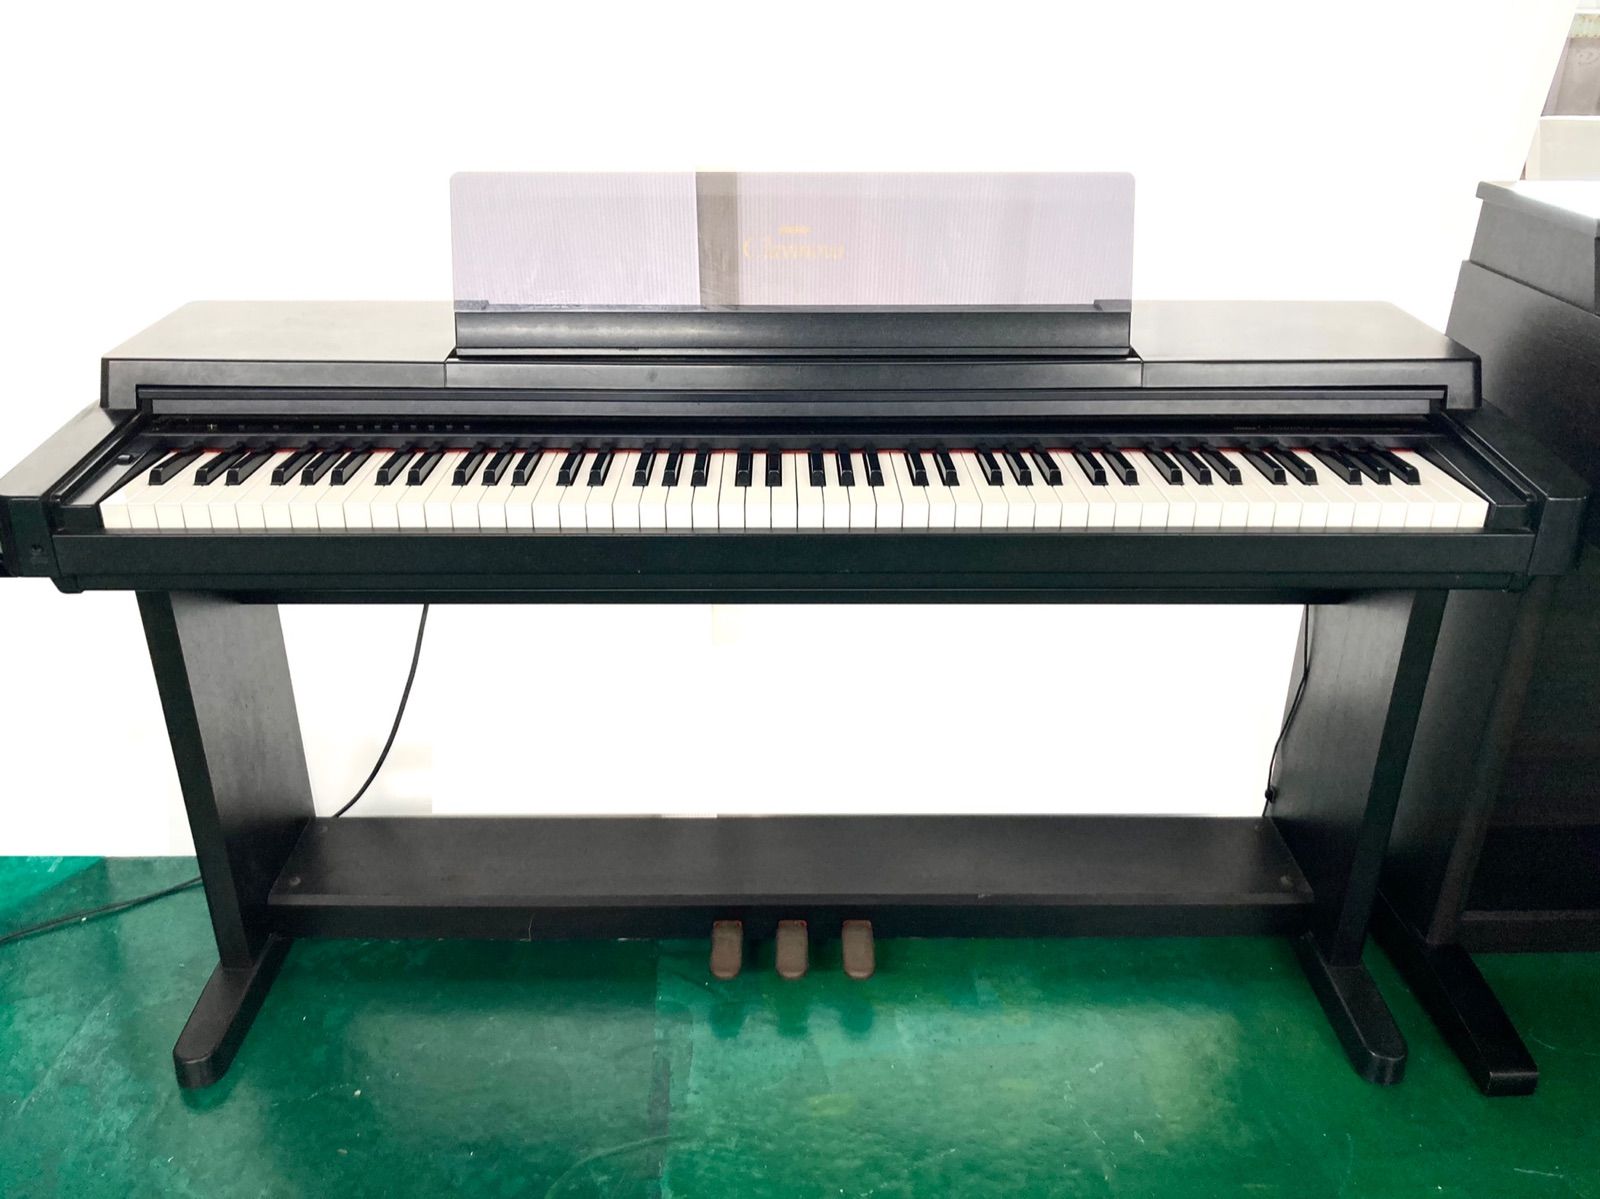 YAMAHAクラビノーバCLP-560 電子ピアノ - 鍵盤楽器、ピアノ